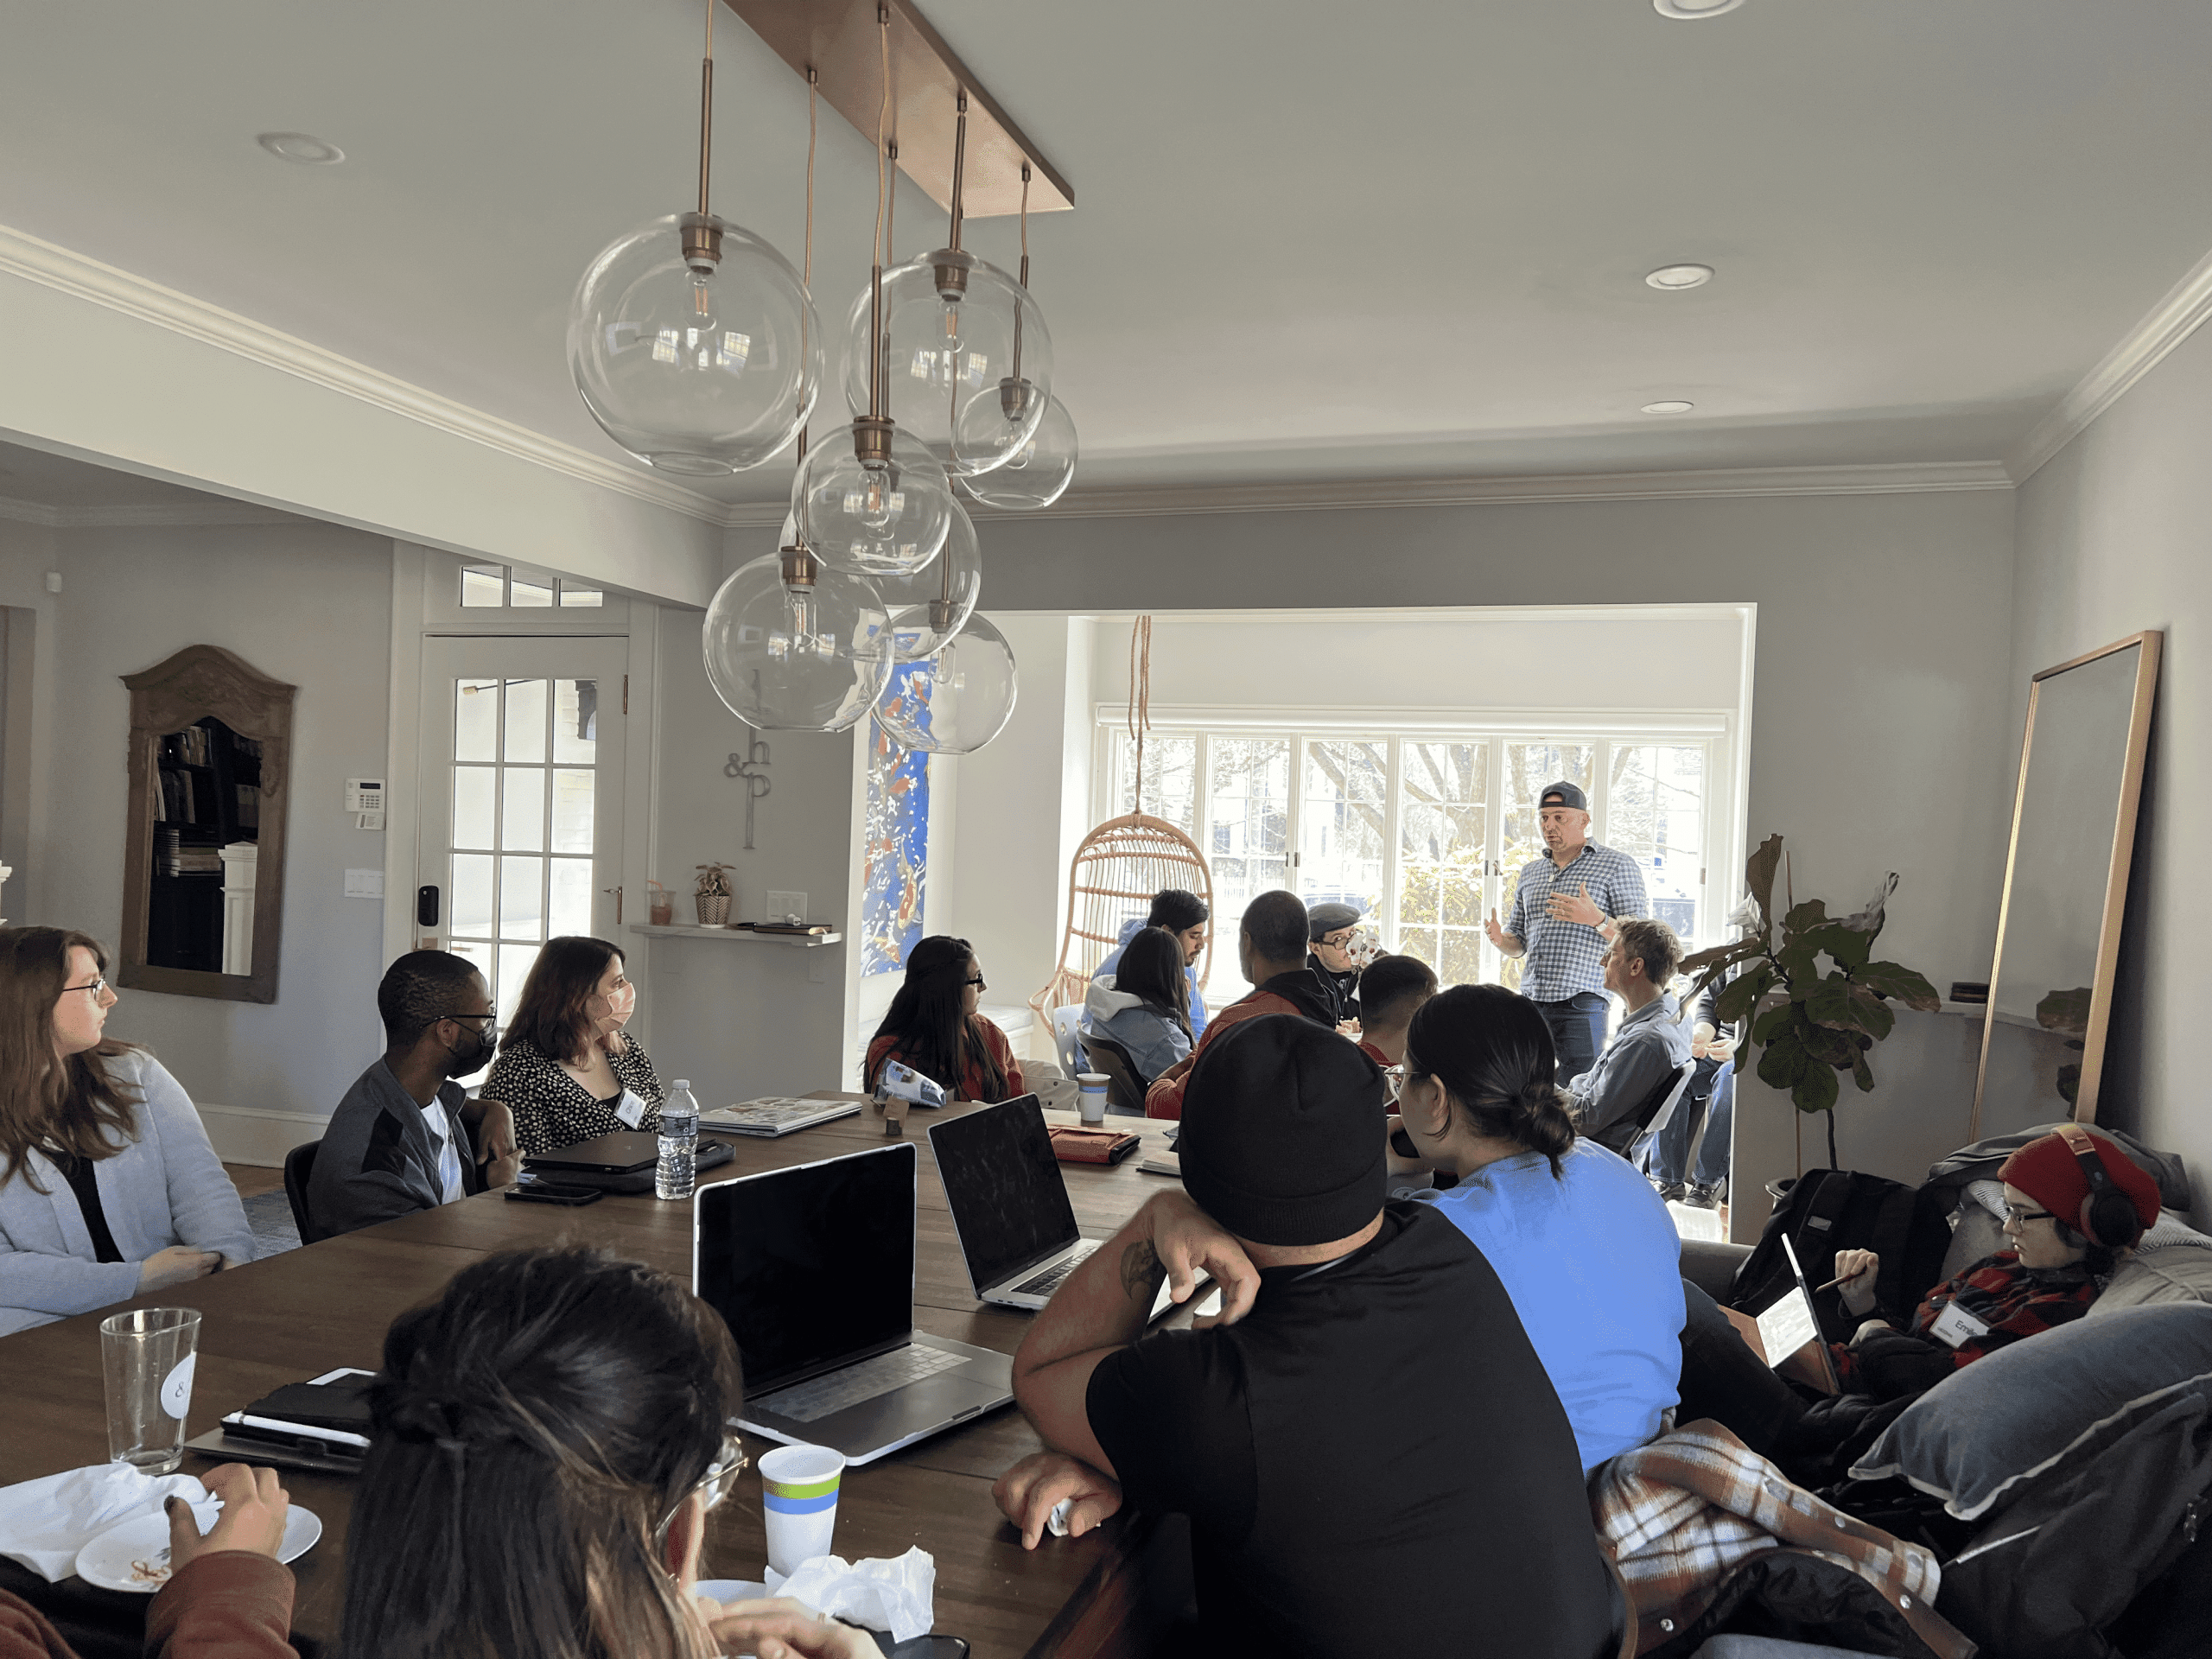 H&P-Led Branding Workshop with UConn Students (Discovering Amistad)